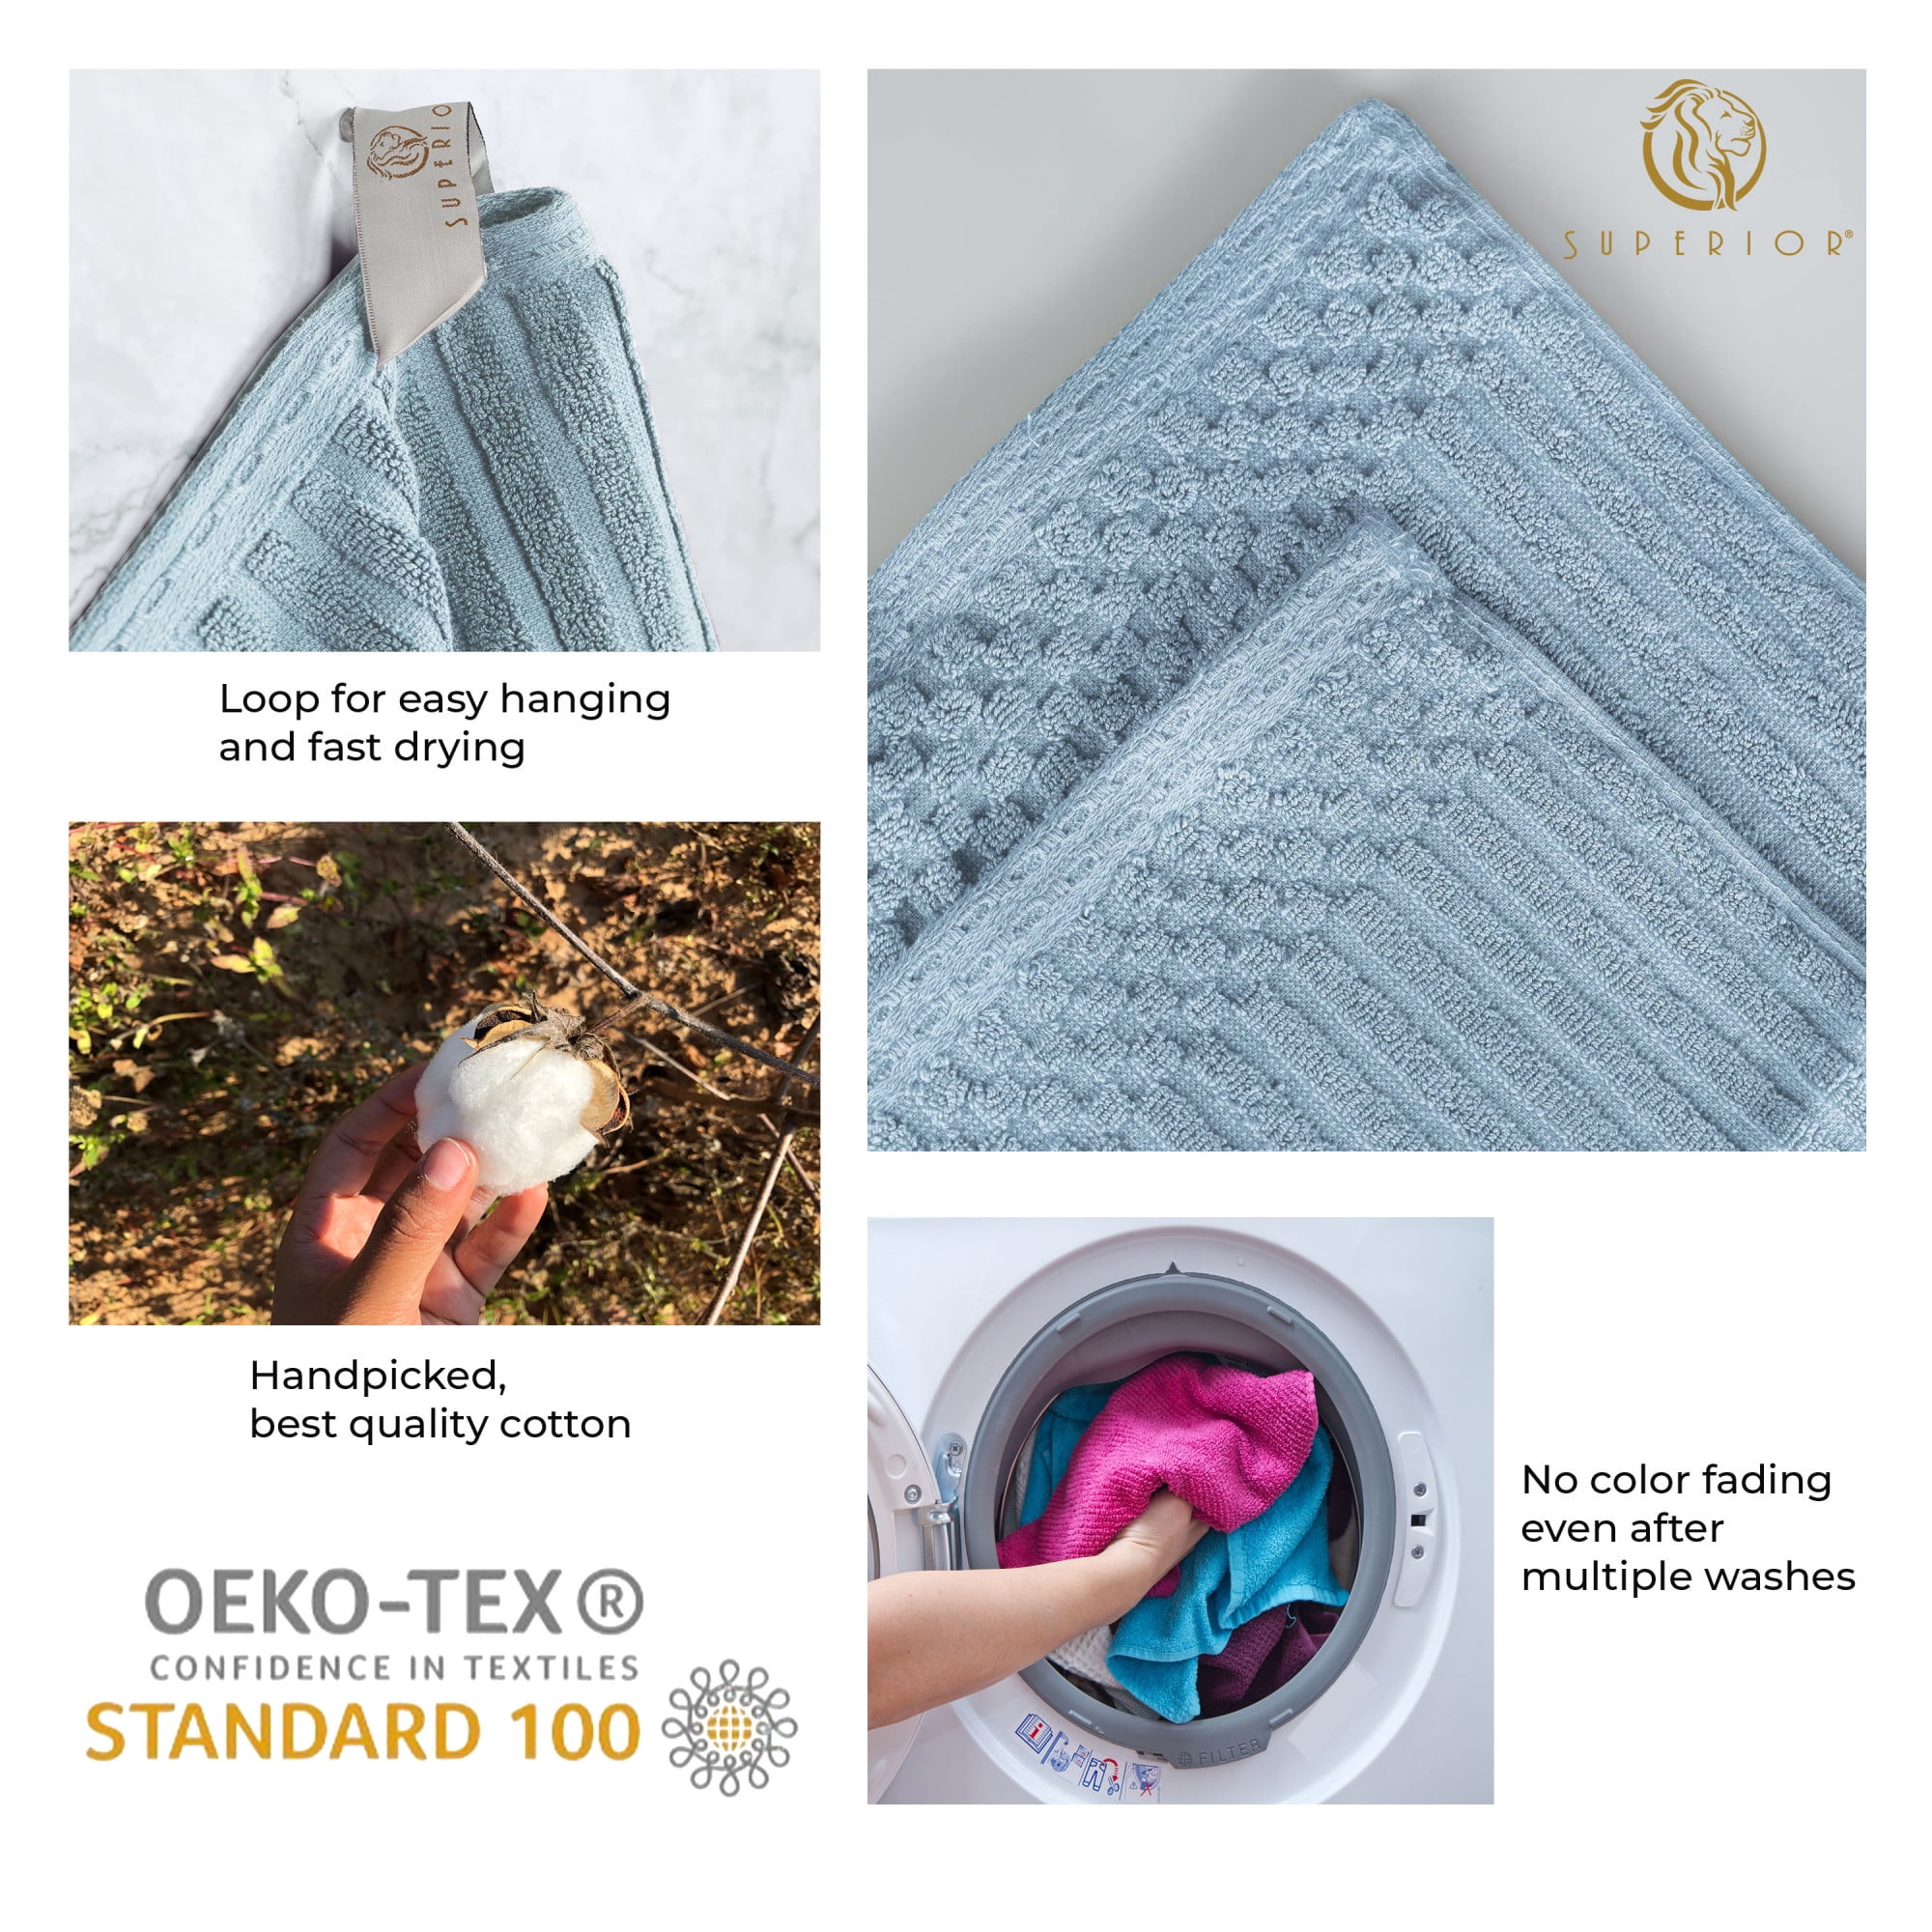 NY Loft 6-Piece Cotton Towel Set - Super Soft & Absorbent, Quick-Dry, Sand Color, Oeko-Tex Certified, Machine Washable